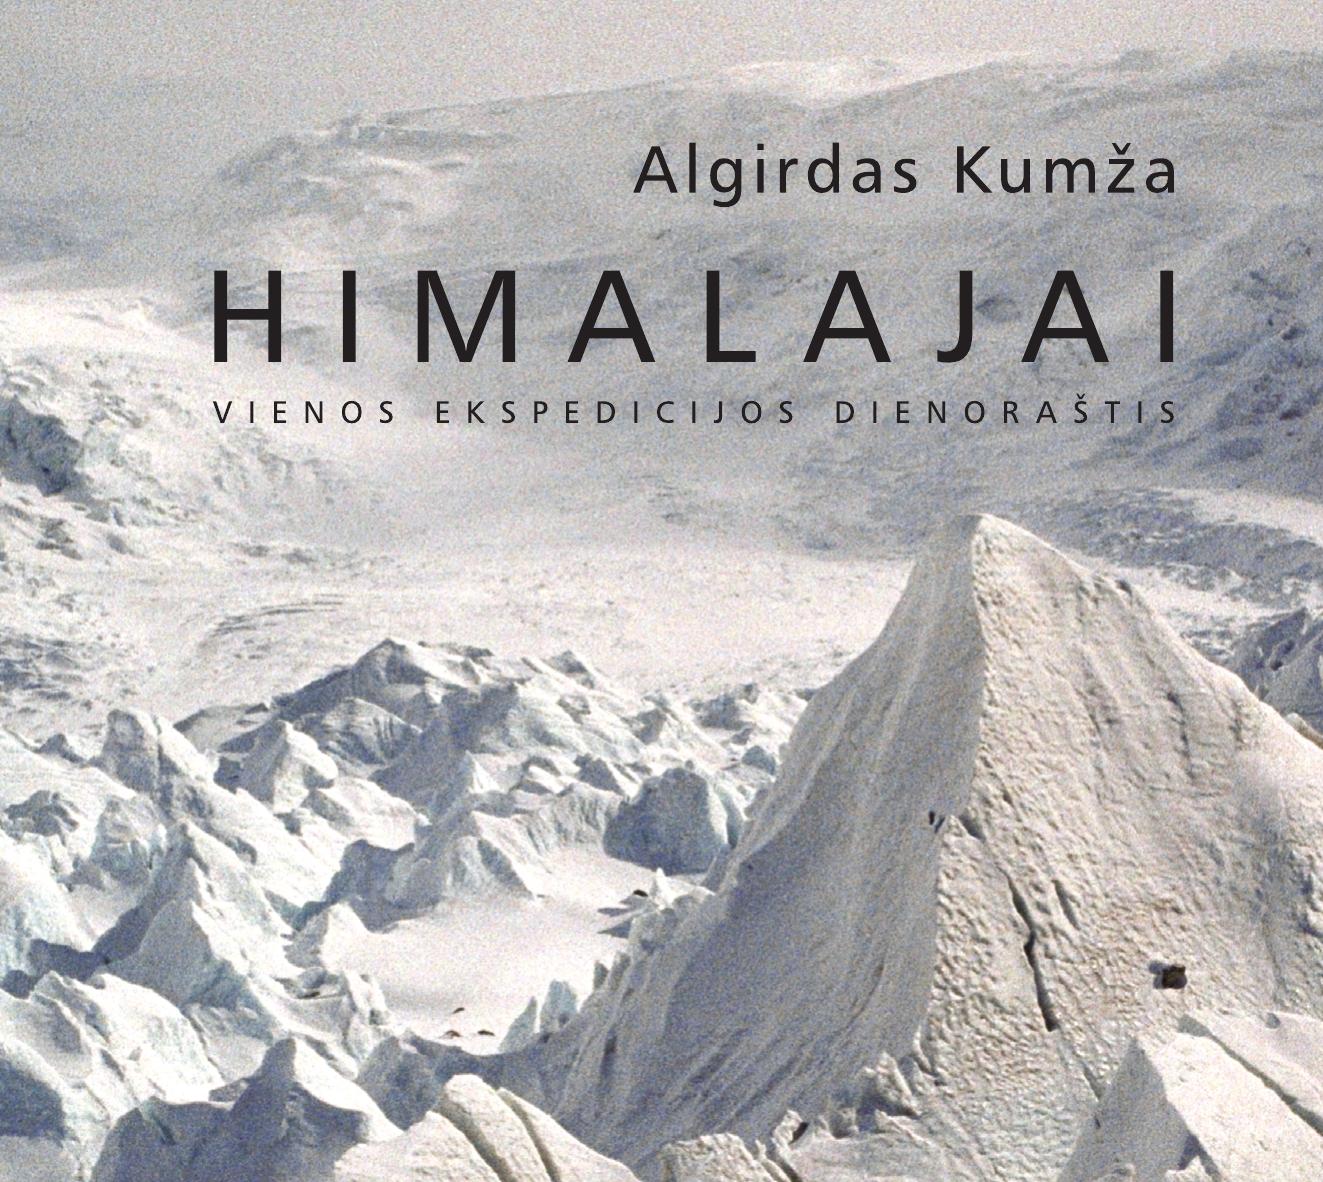 Algirdas.Kumza.-.Himalajai.vienos.ekspedicijos.dienorastis.2005.LT